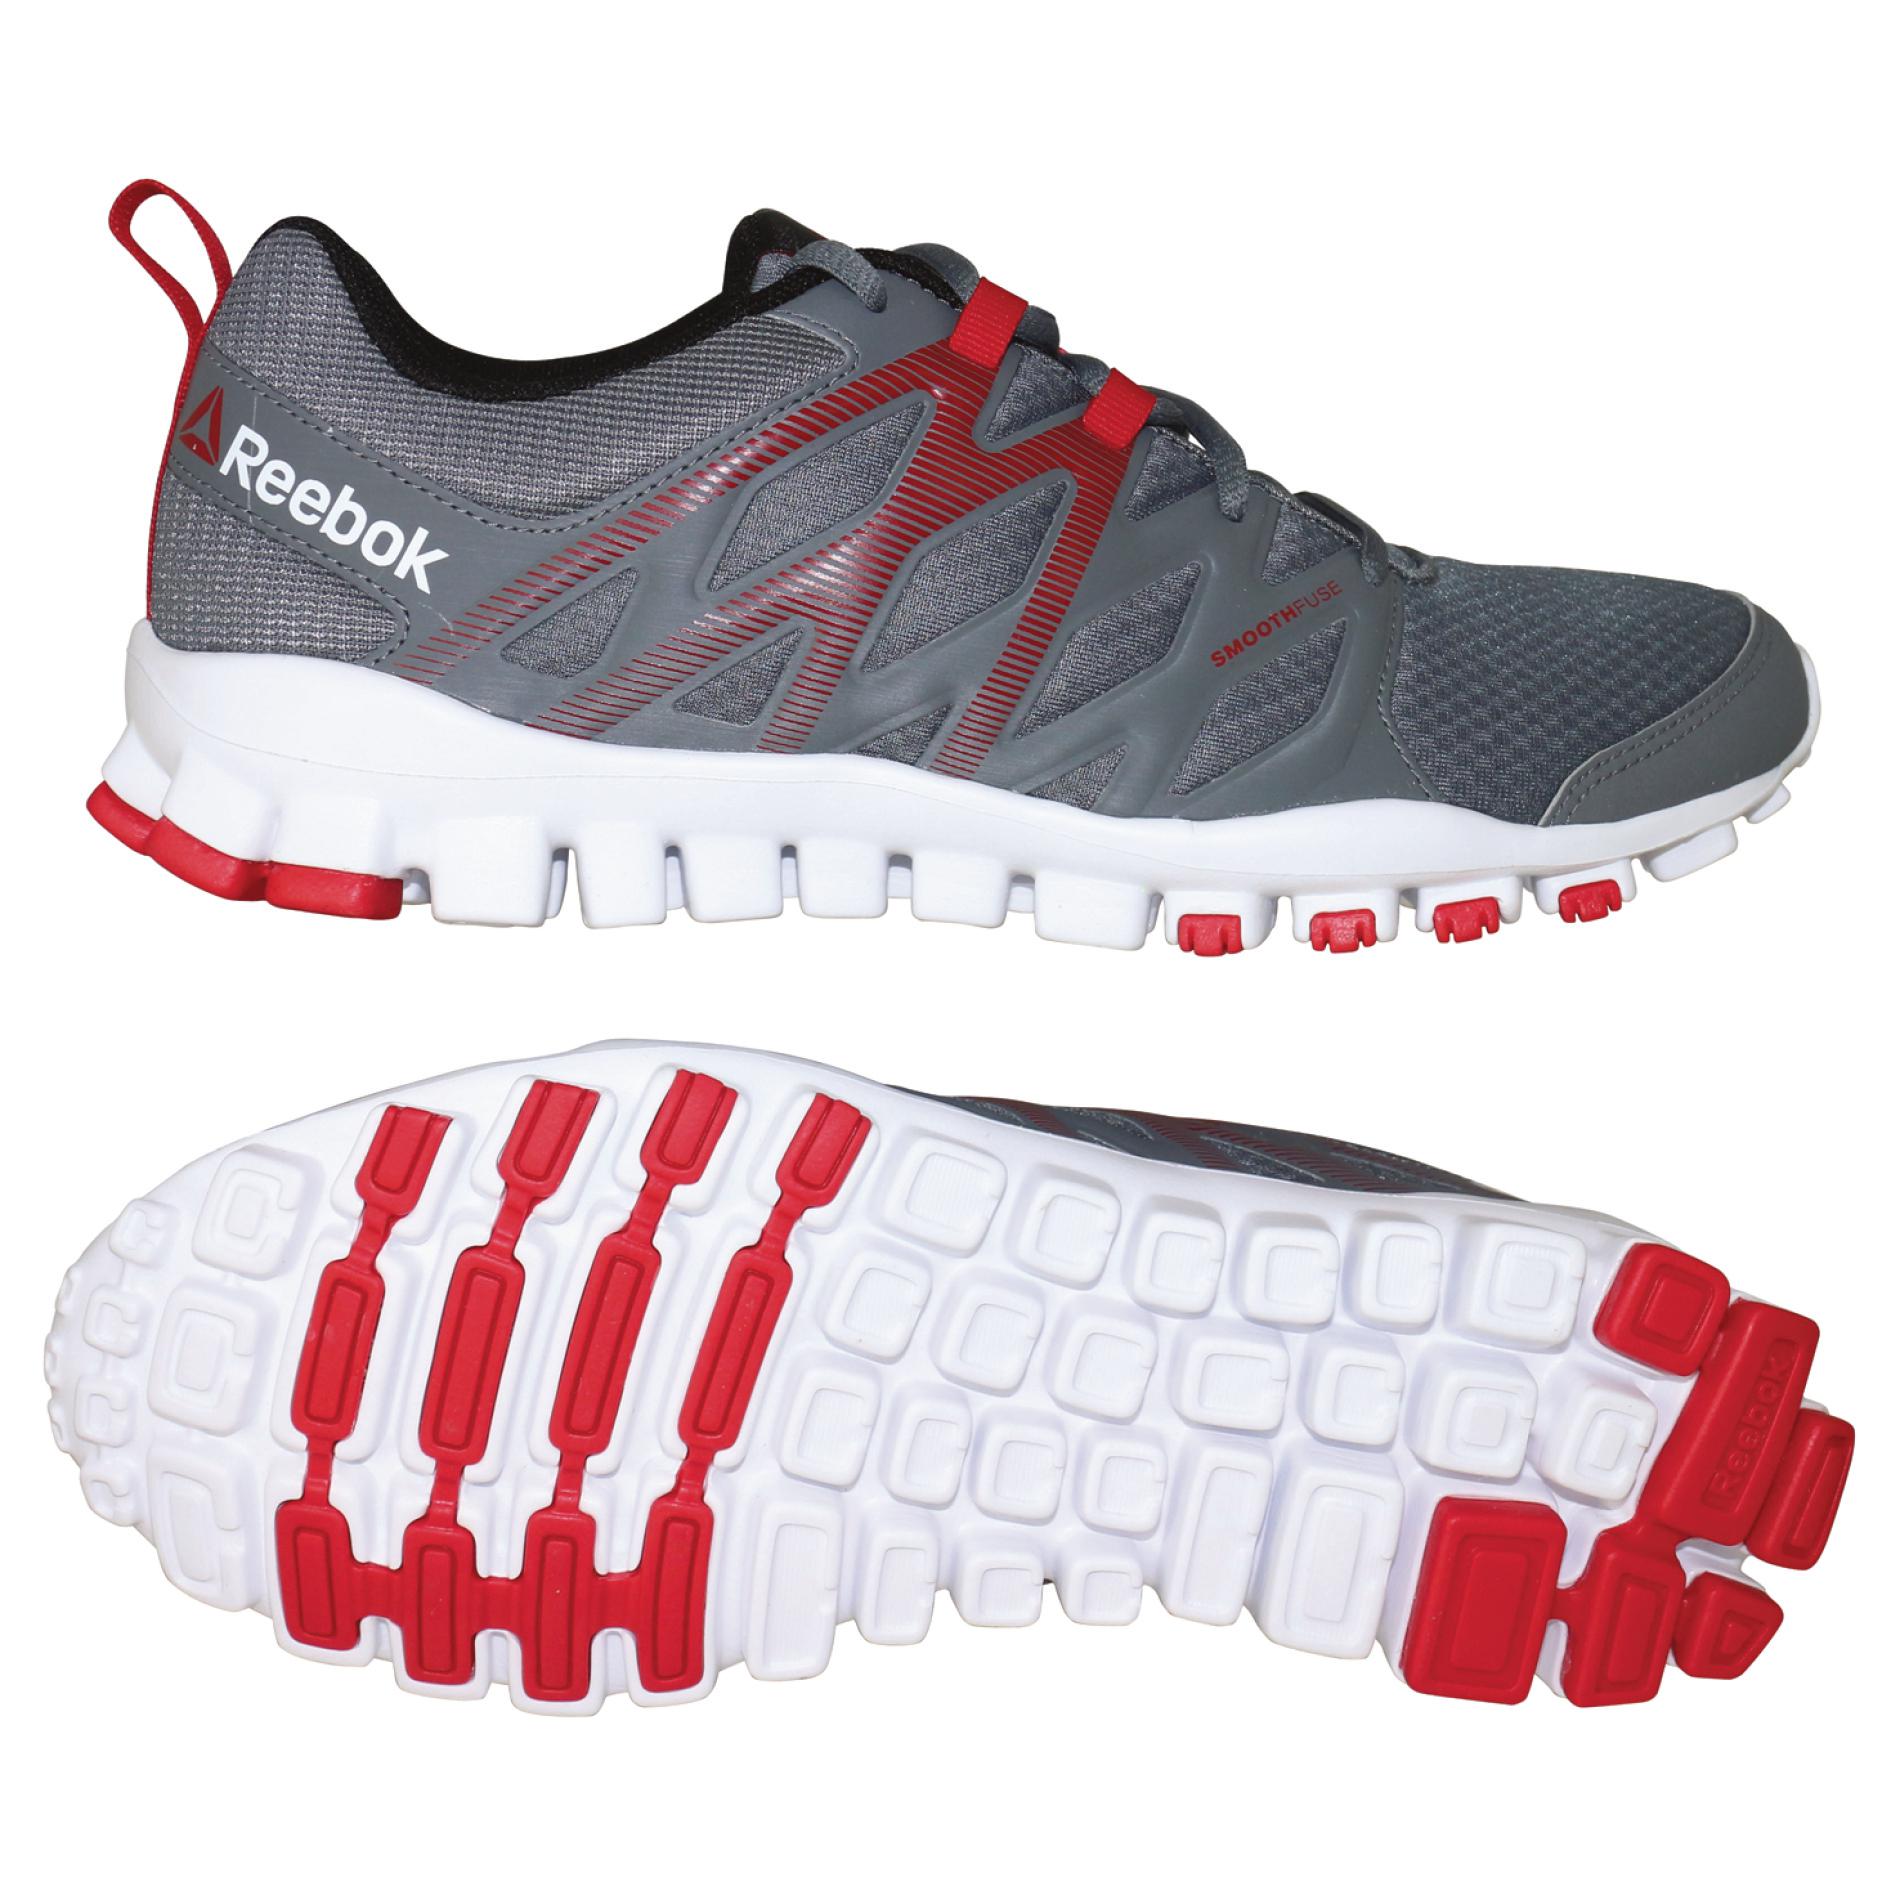 Reebok Men's RealFlex Train 4.0 Gray/Red Athletic Shoe